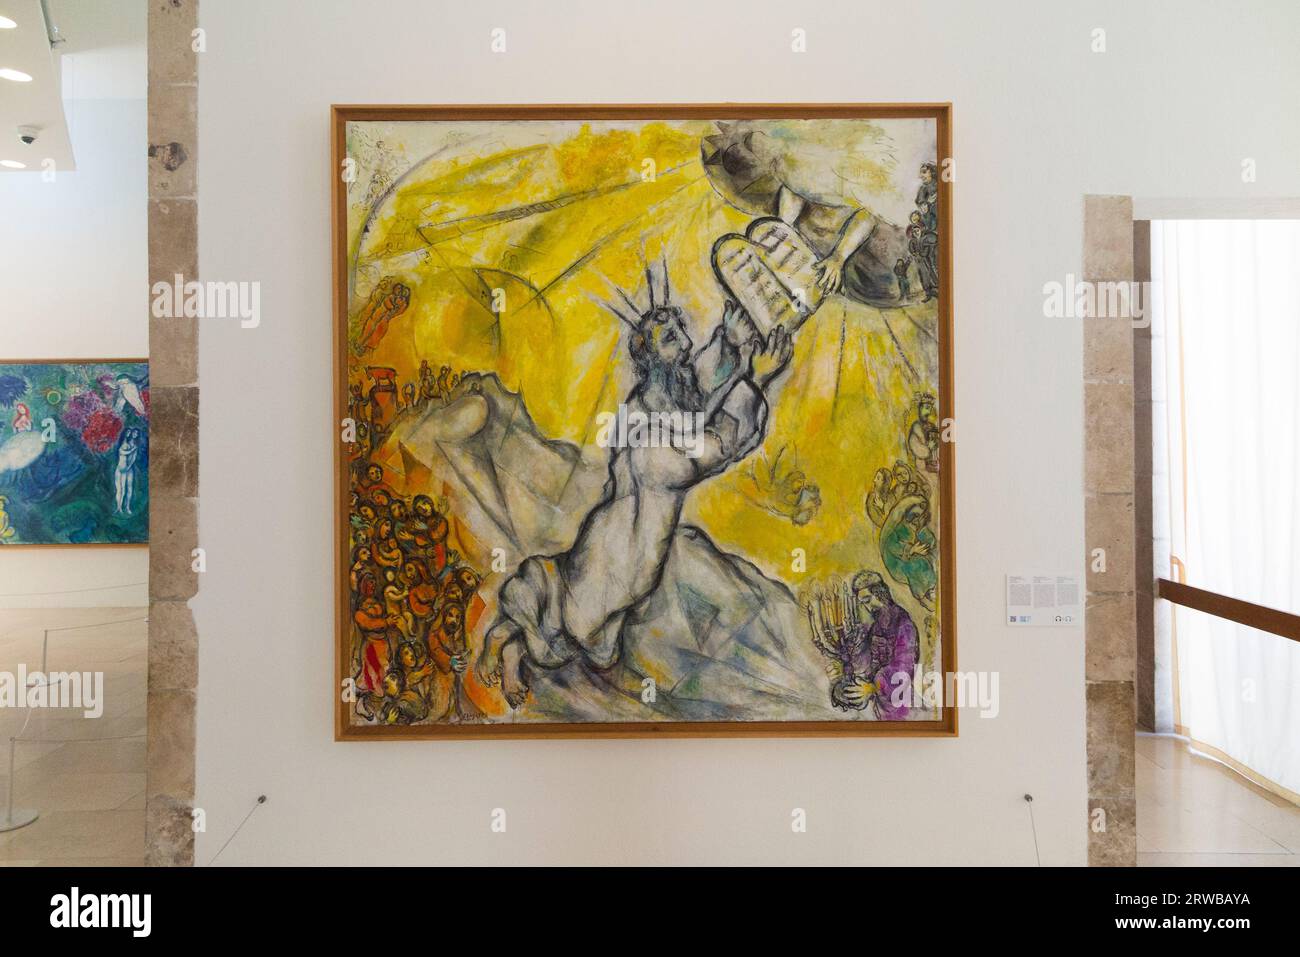 Marc Chagalls Gemälde „Mose recevant les tables de la loi“ (Moses erhält die Gesetzestafeln) ist im Musée National Marc Chagall in Nizza zu sehen. Frankreich. (135) Stockfoto